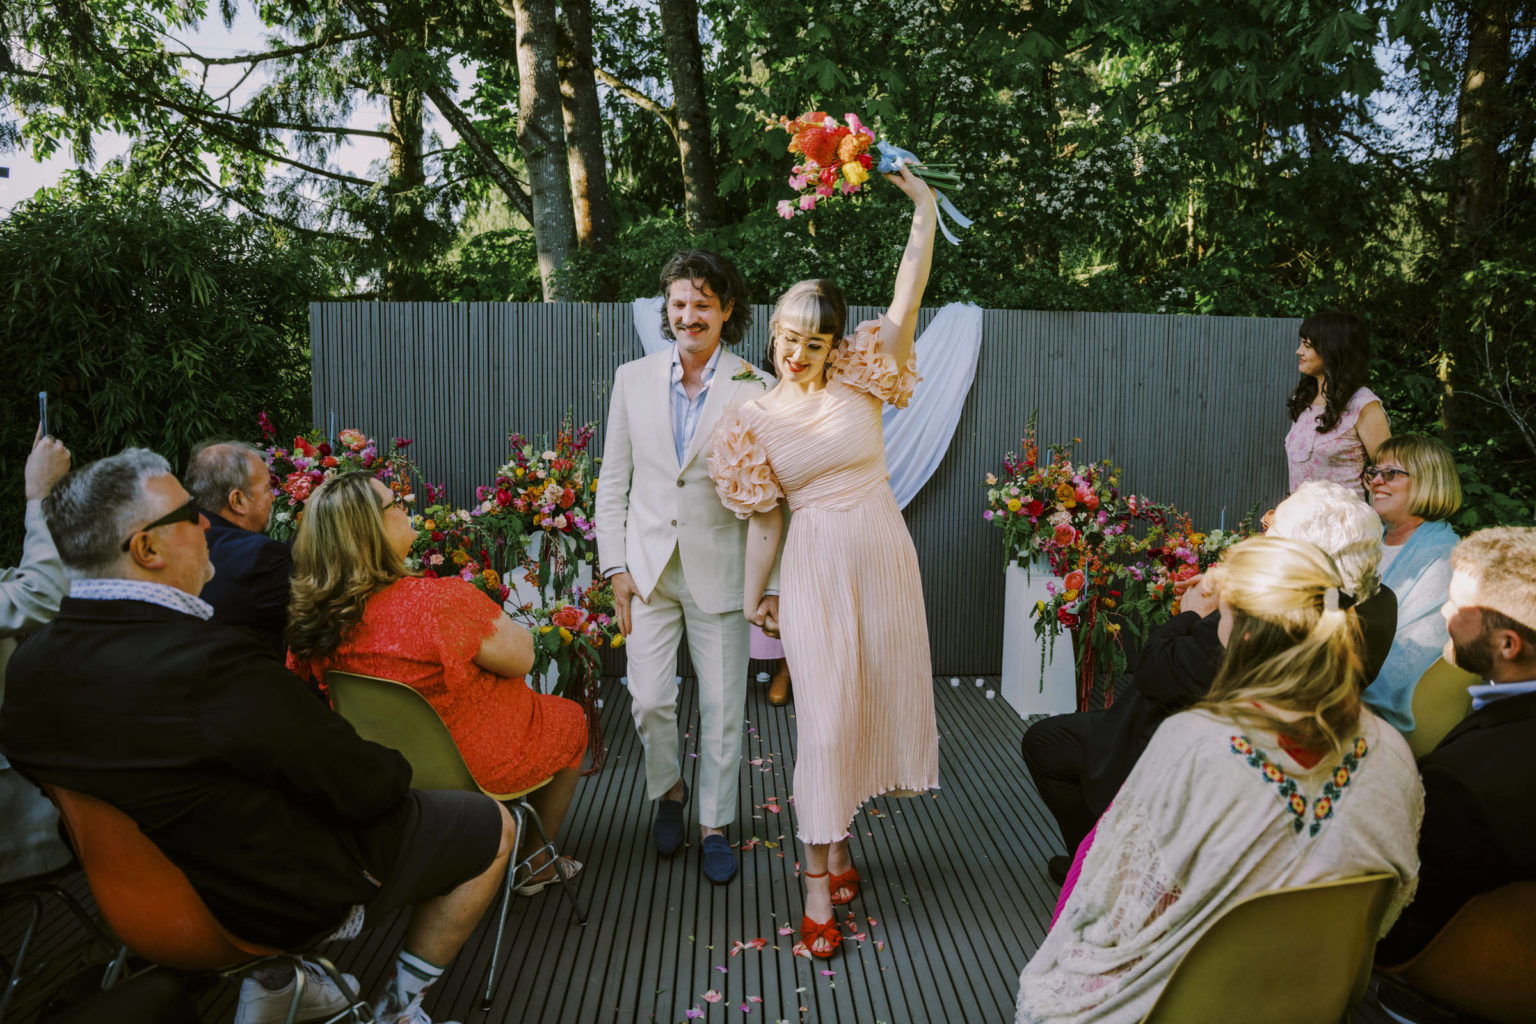 Married! Teresa and Shaun walk down the aisle, Seward Park, Spring 2022